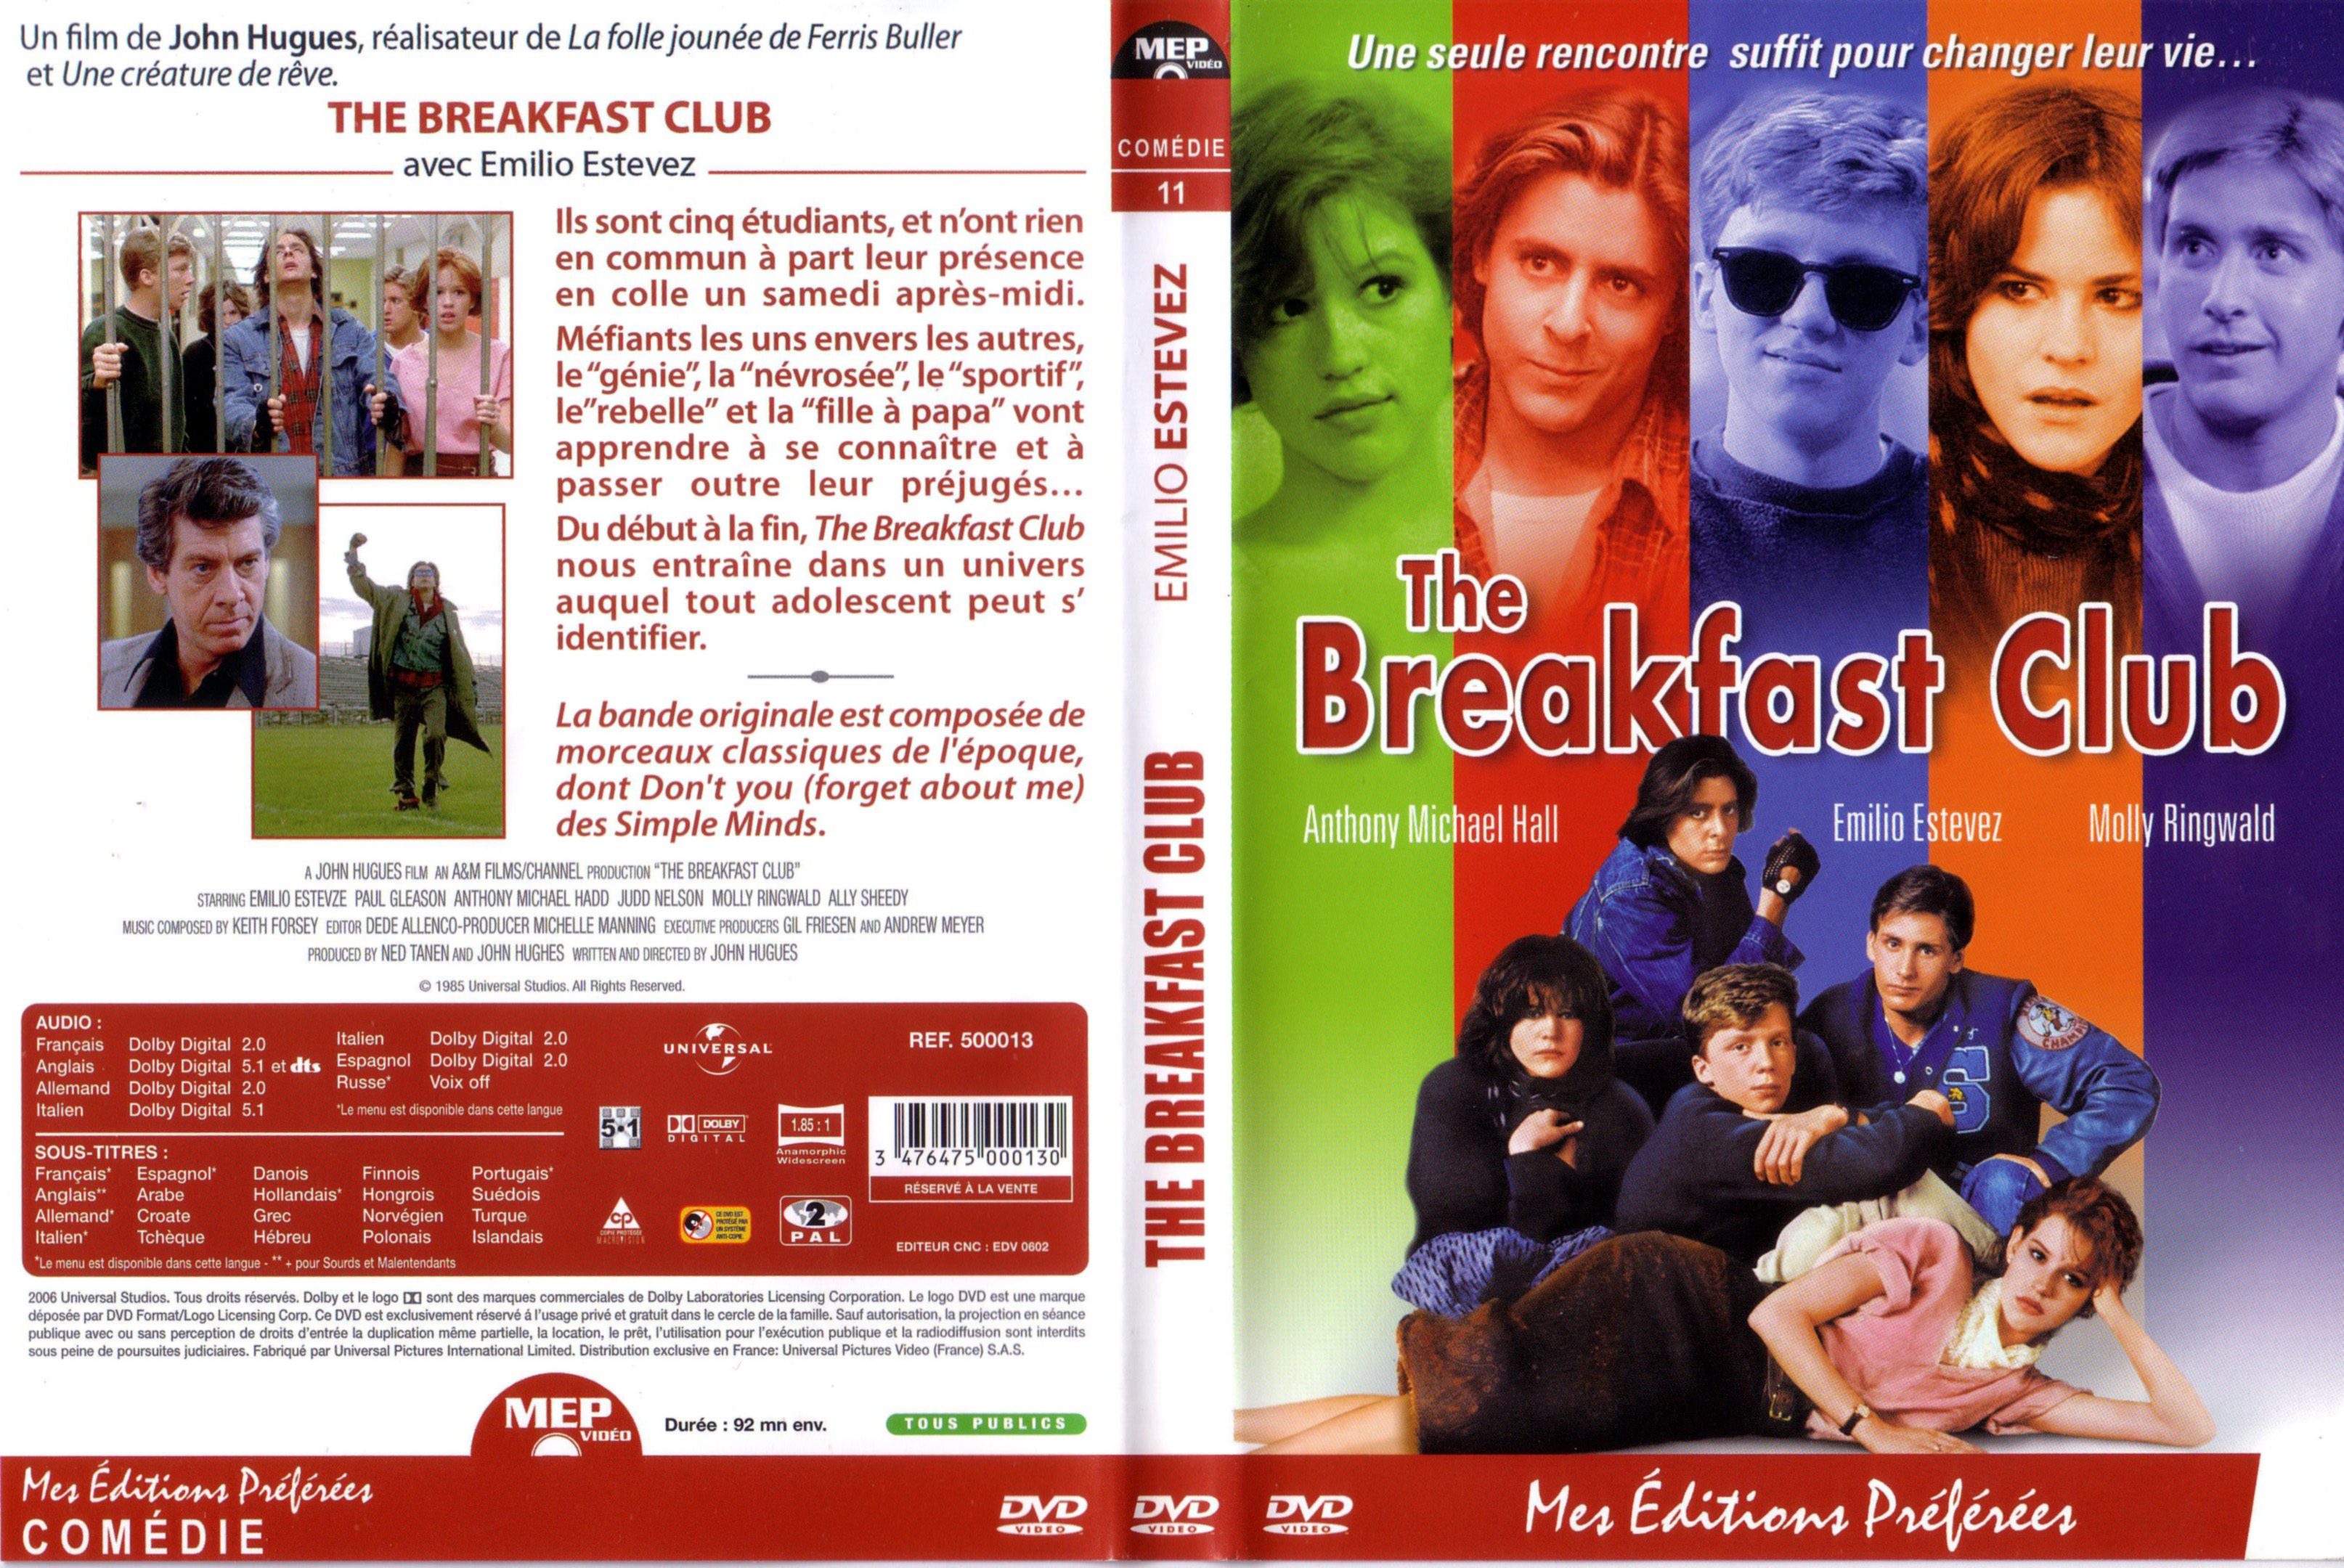 Jaquette DVD The Breakfast Club (BLU-RAY) v2